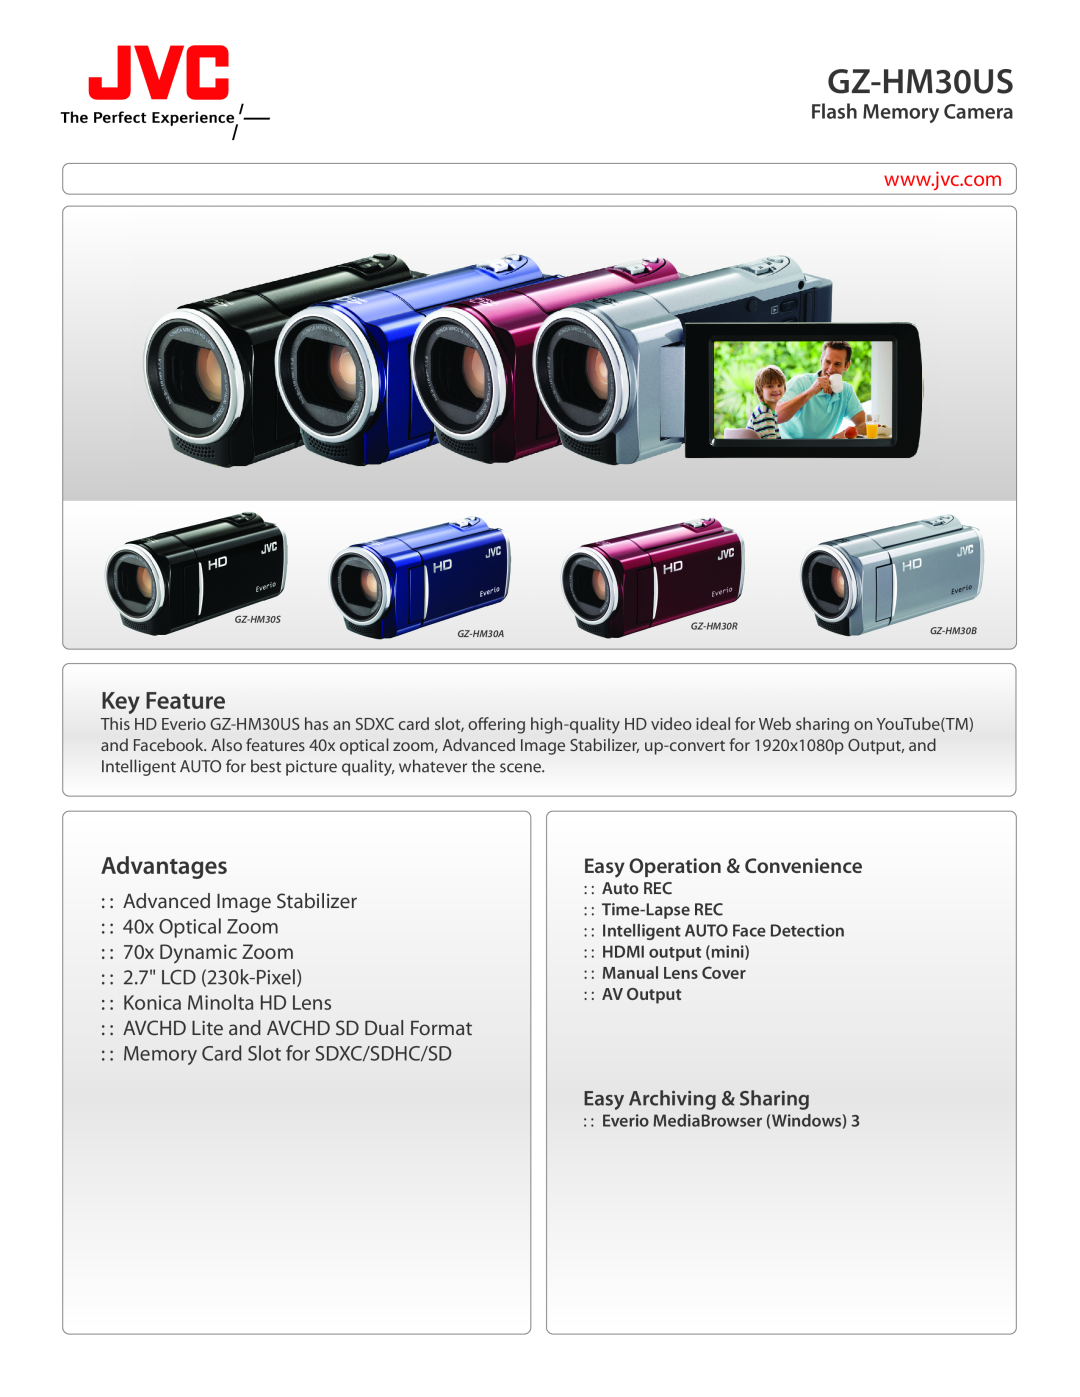 JVC flash memory camera manual GZ-HM30US, Key Feature, Advantages, Flash Memory Camera, Easy Operation & Convenience 